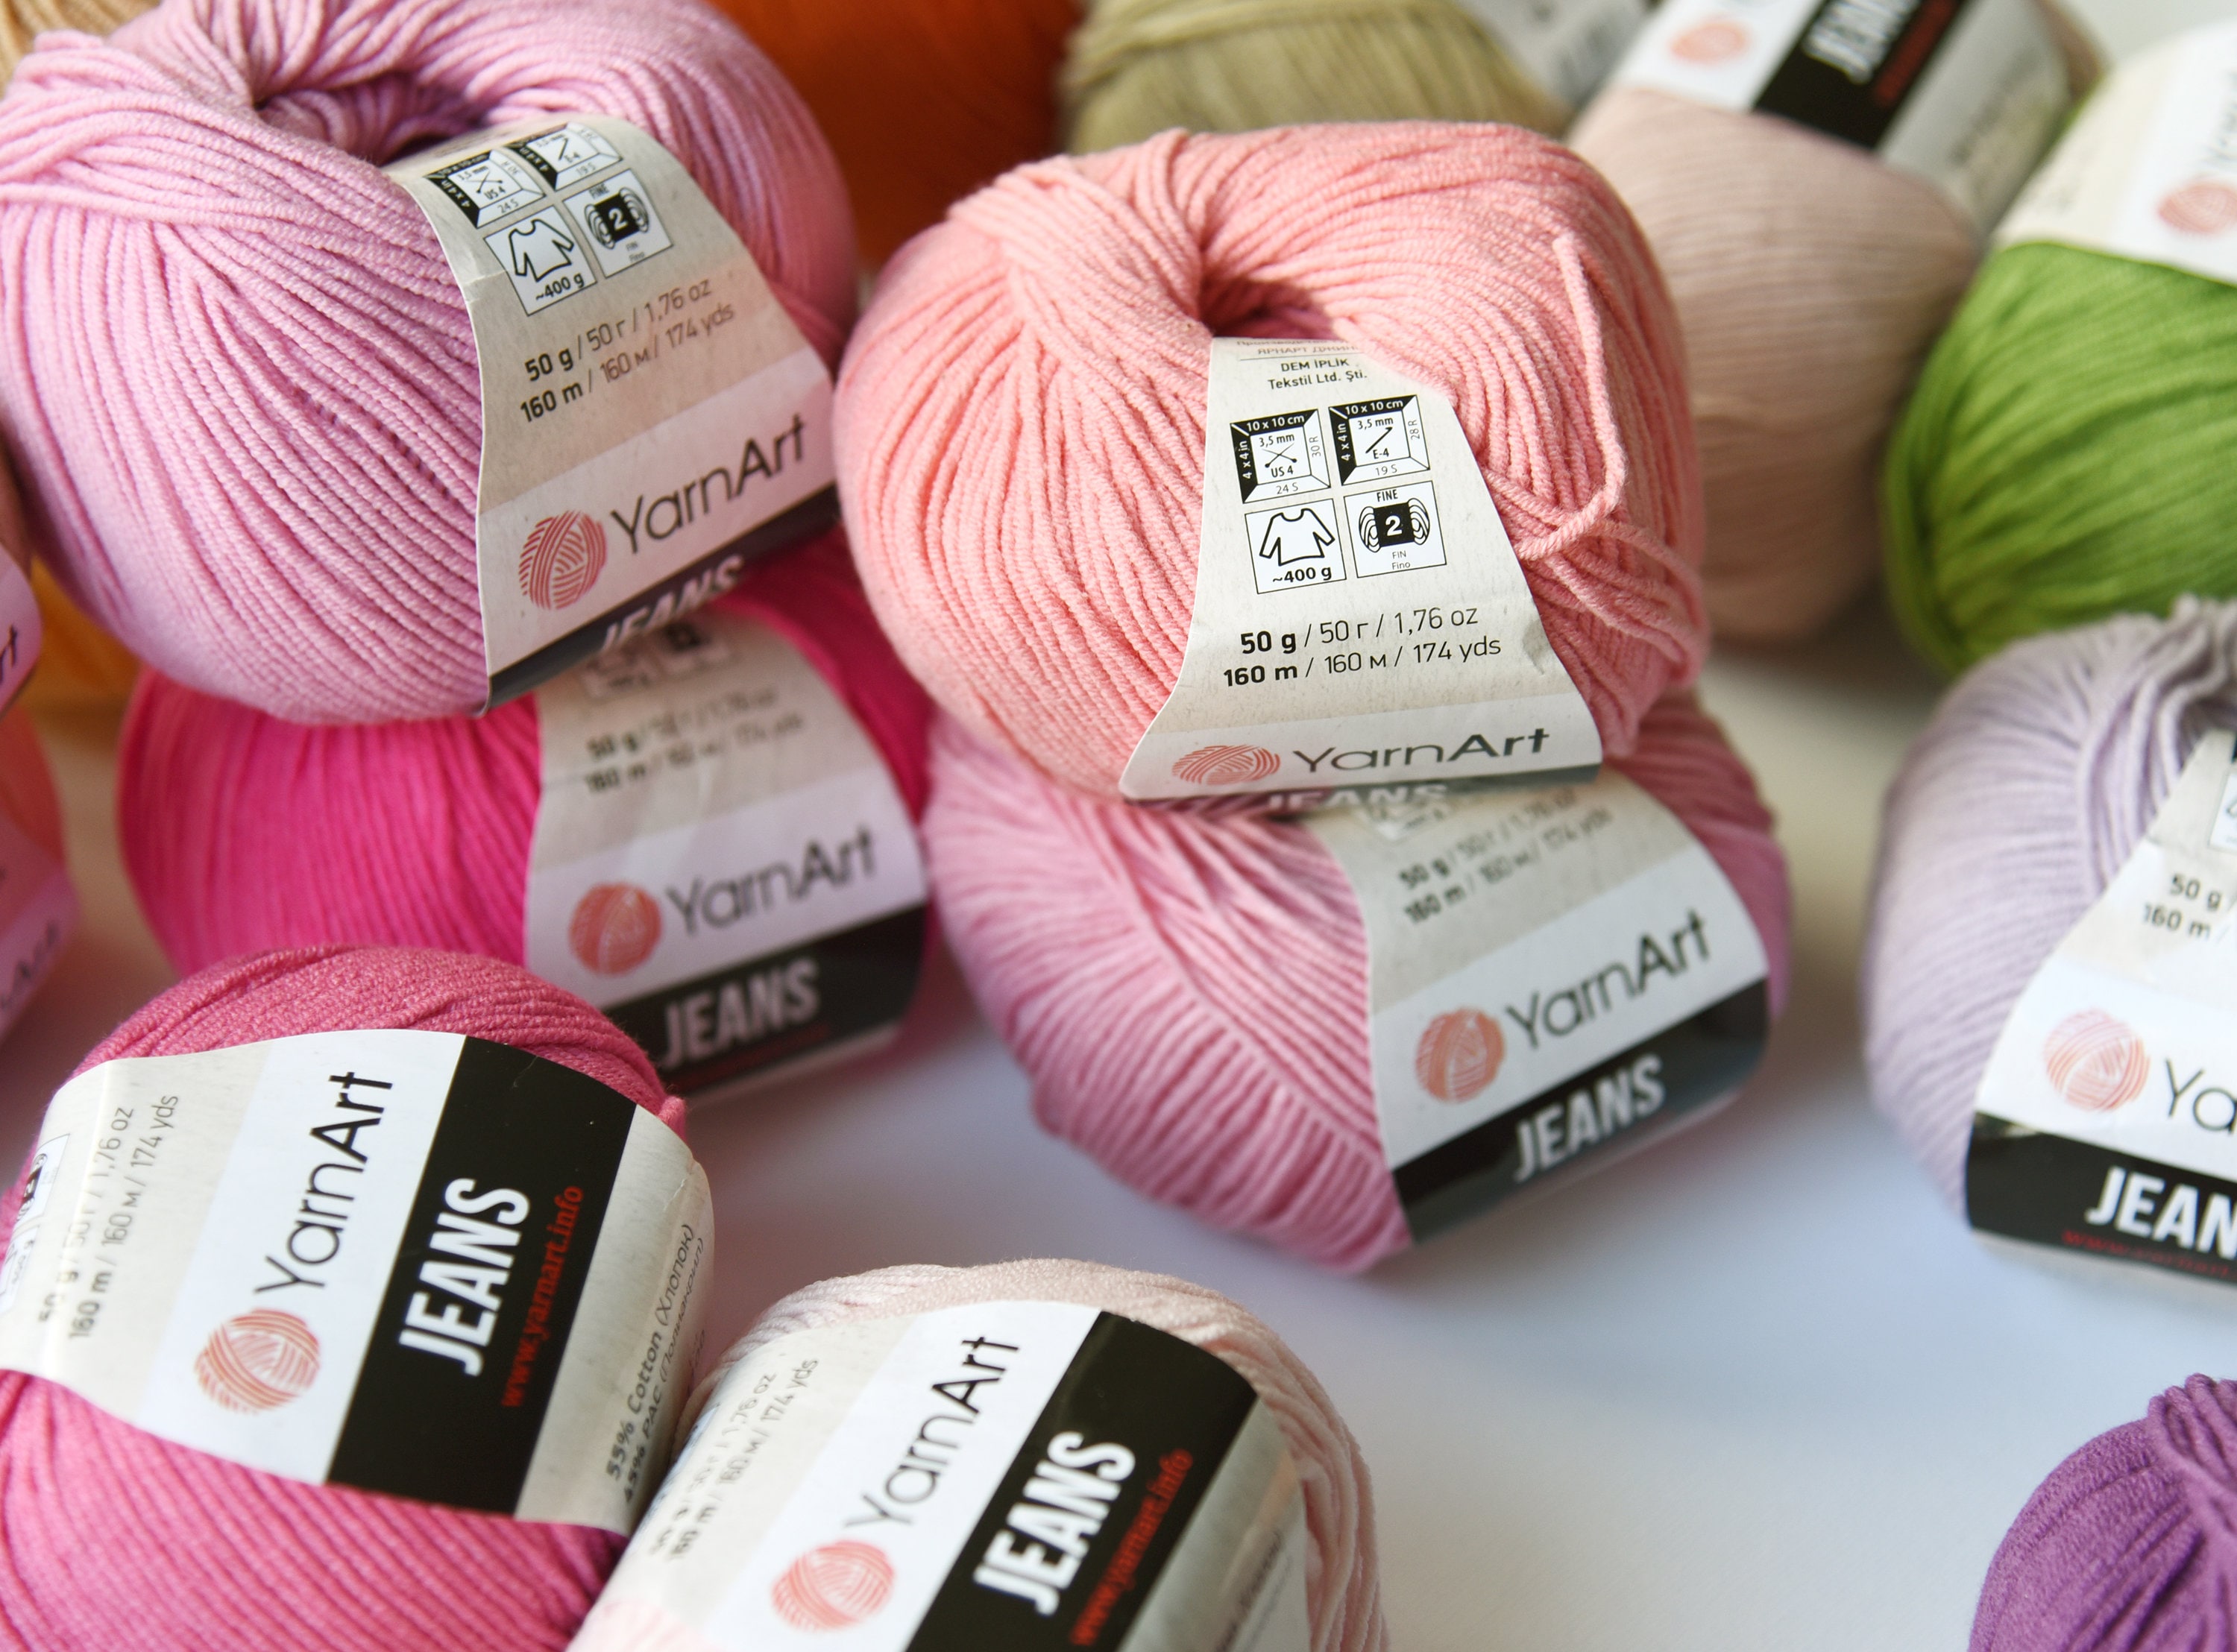 Yarn Art Jeans,amigurumi Soft Cotton Yarn,knitting Crochet Baby